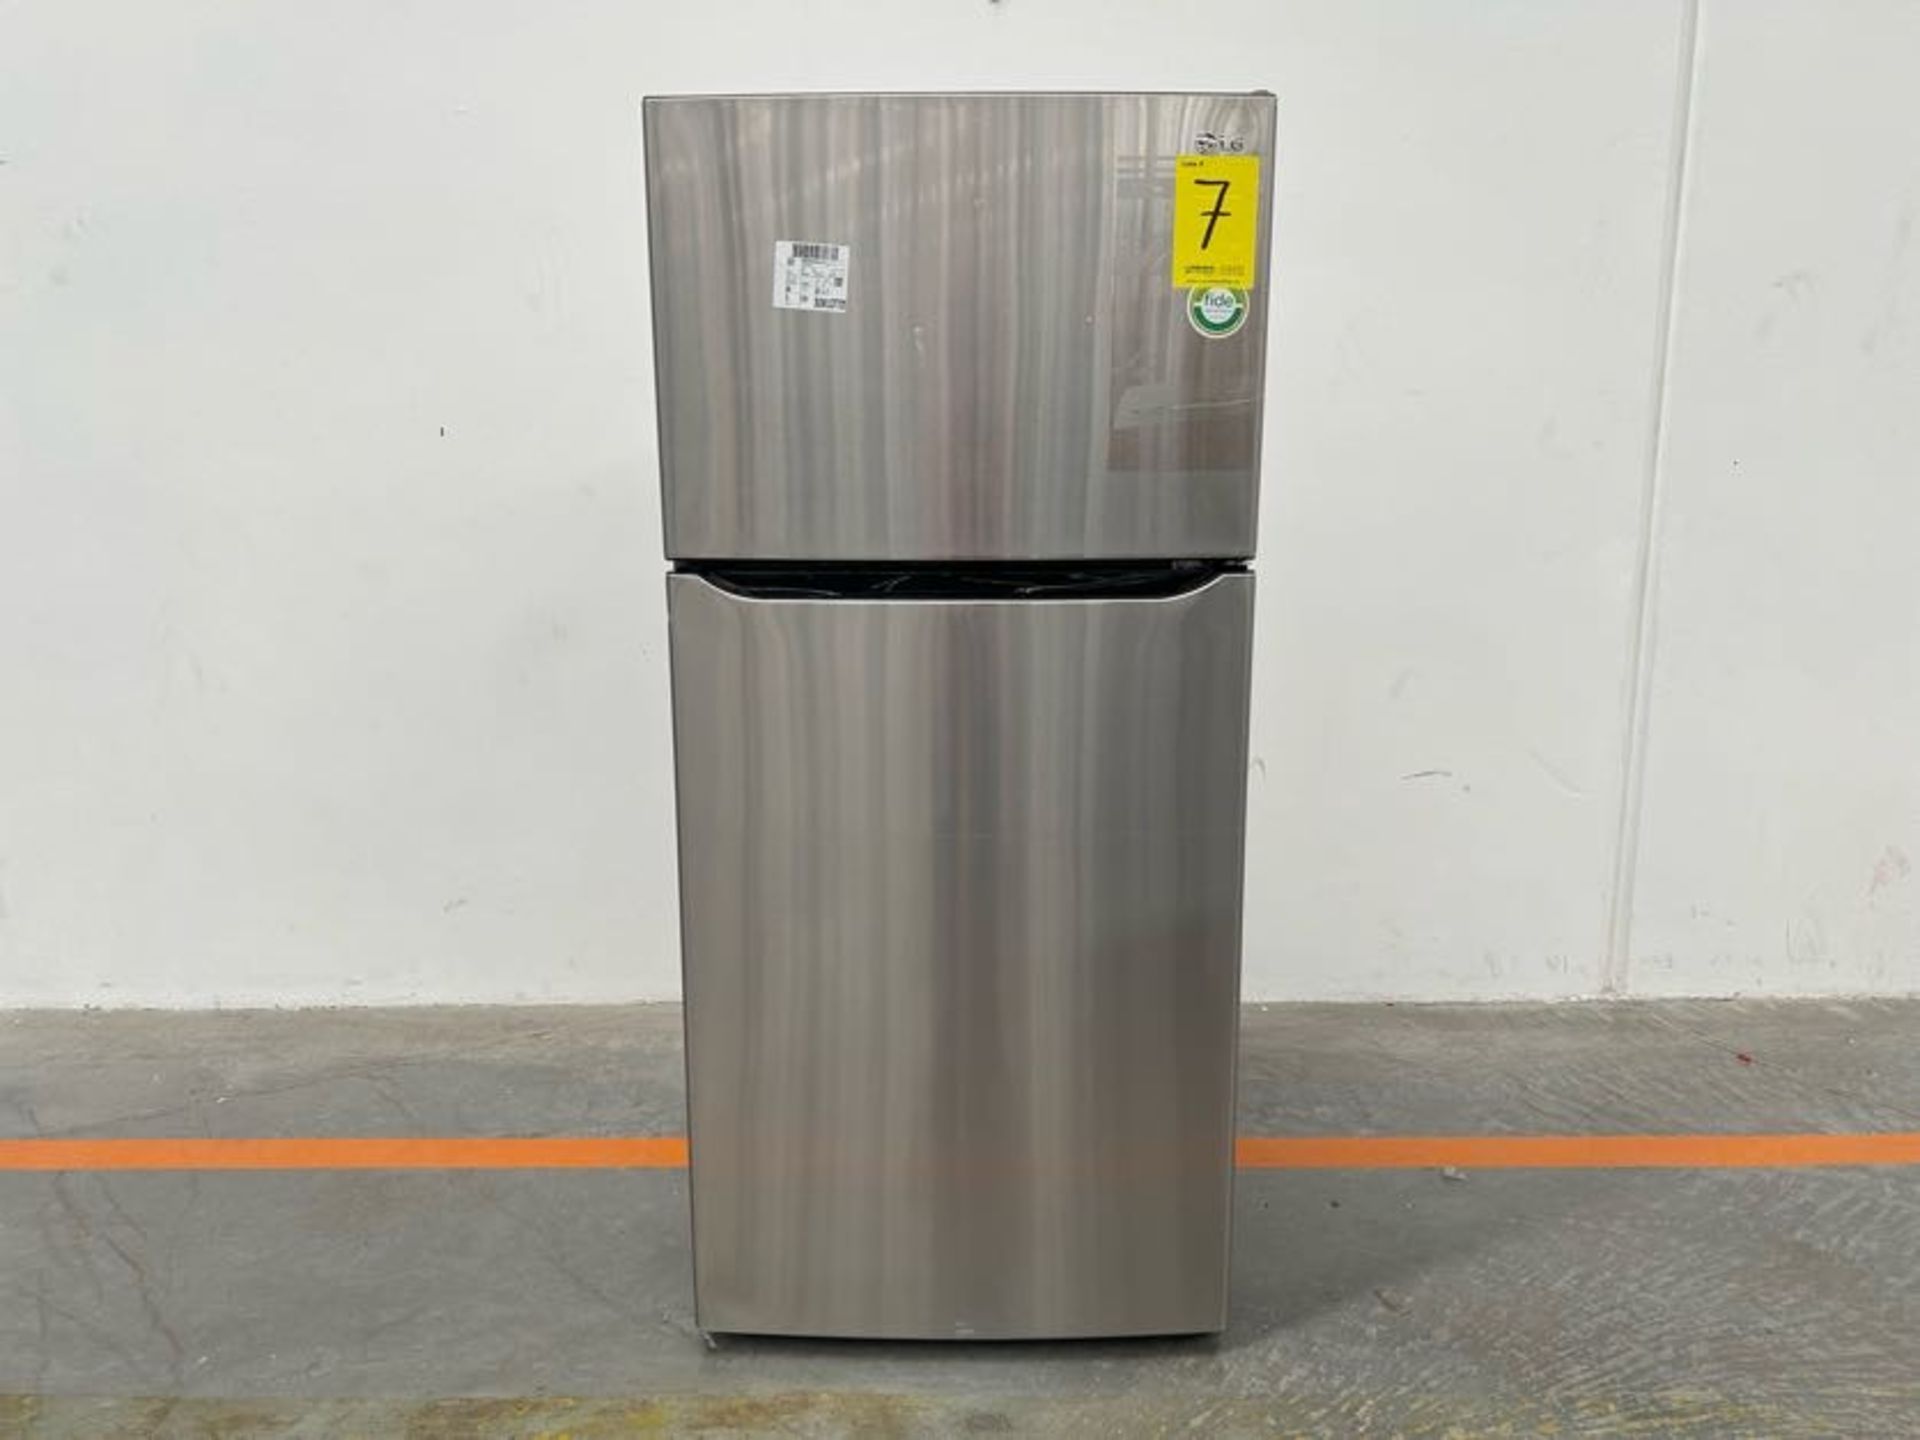 Refrigerador Marca LG, Modelo LT57BPSX, Serie 2Z784, Color GRIS (Equipo de devolución)